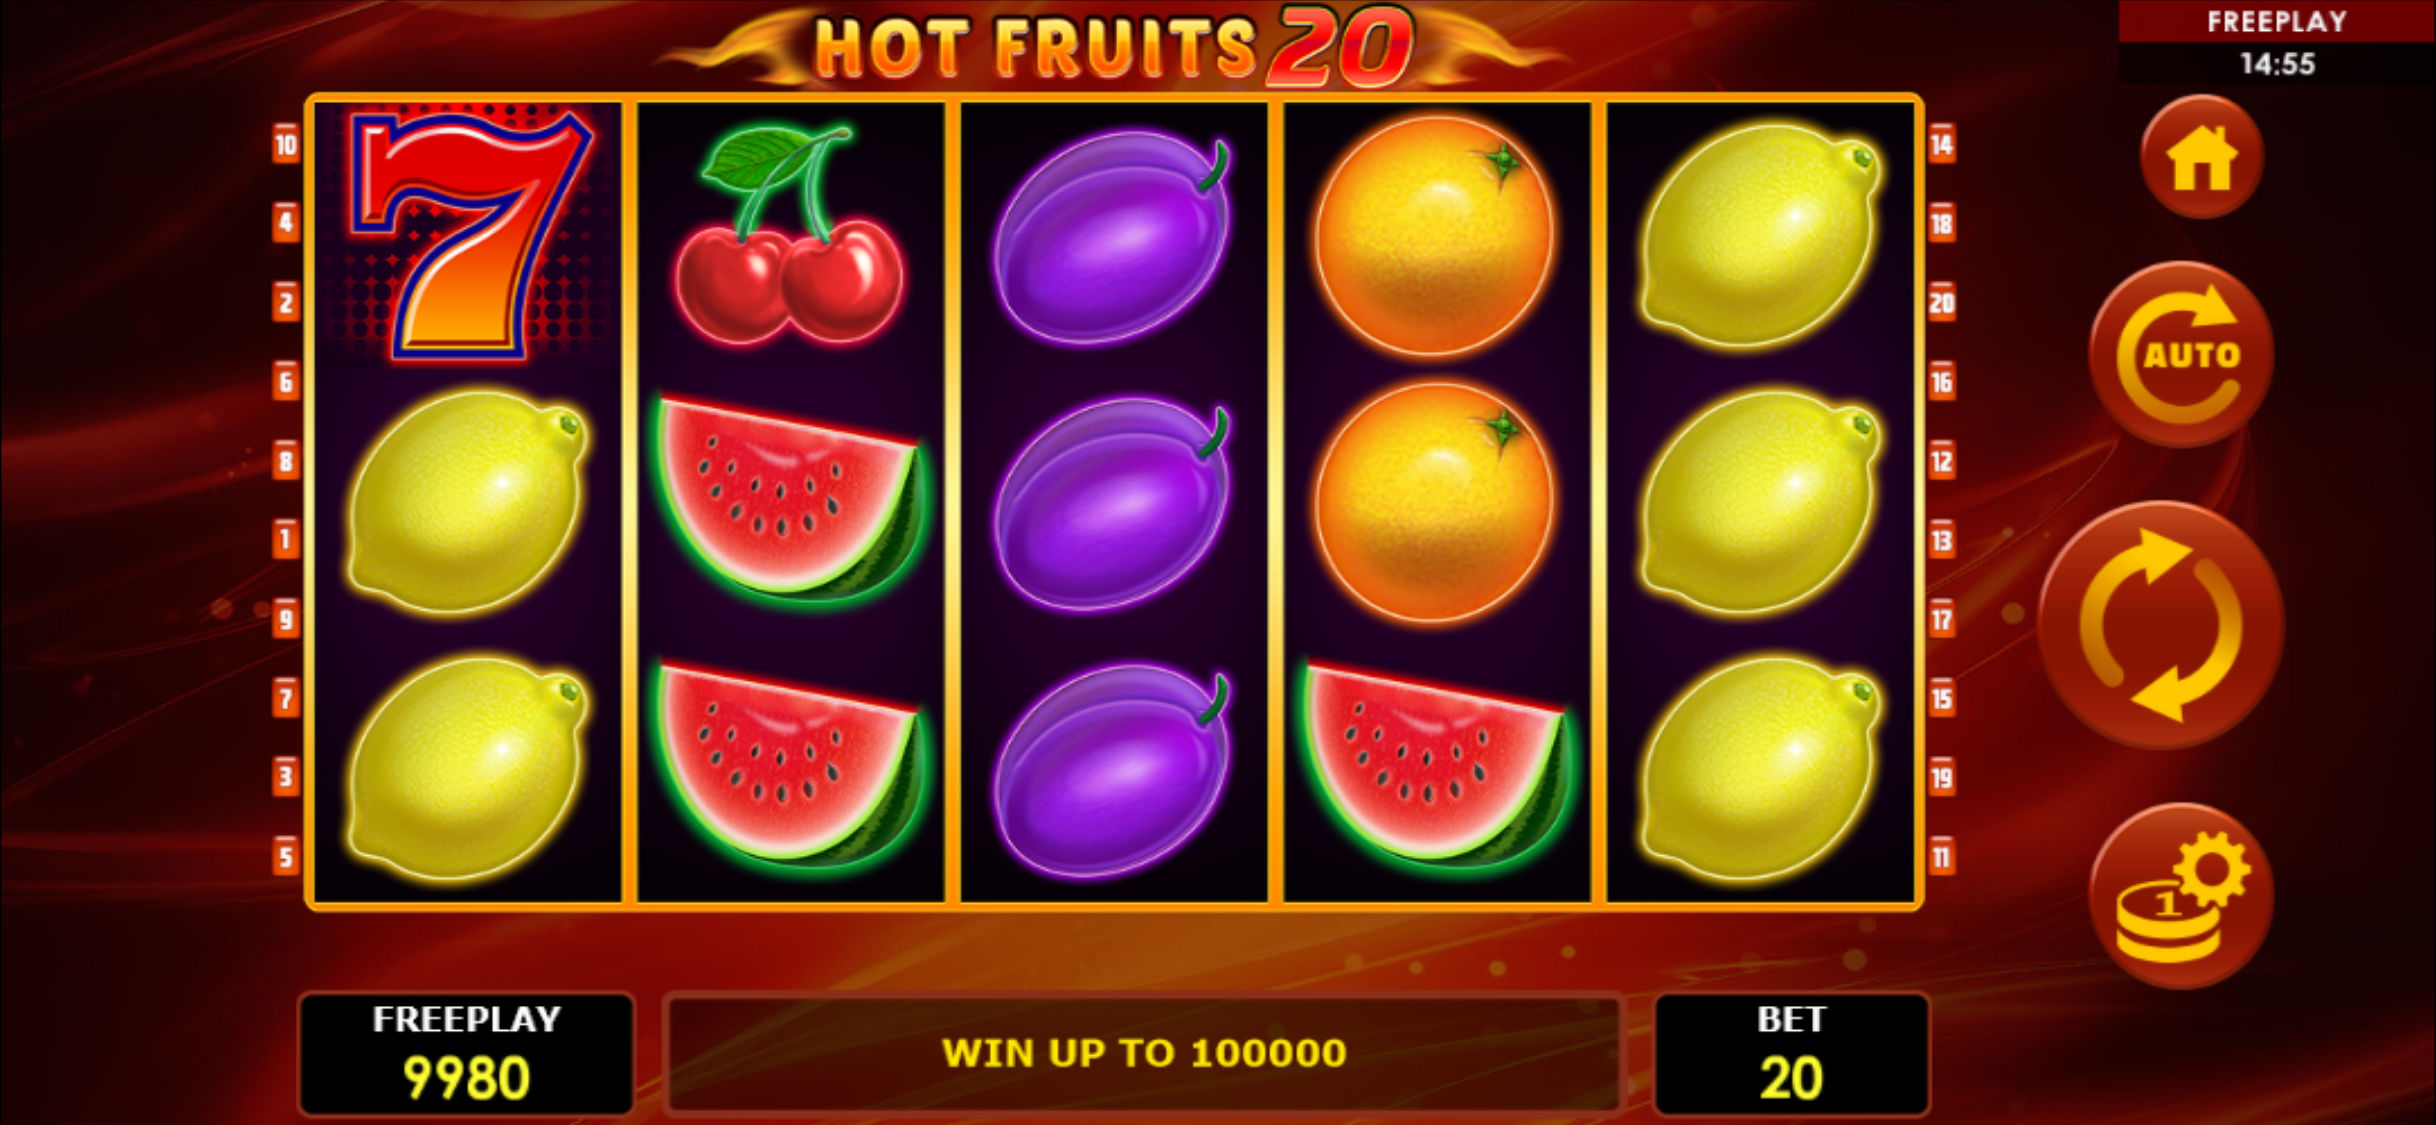 Das ist Casino Mobile Slot Games Review